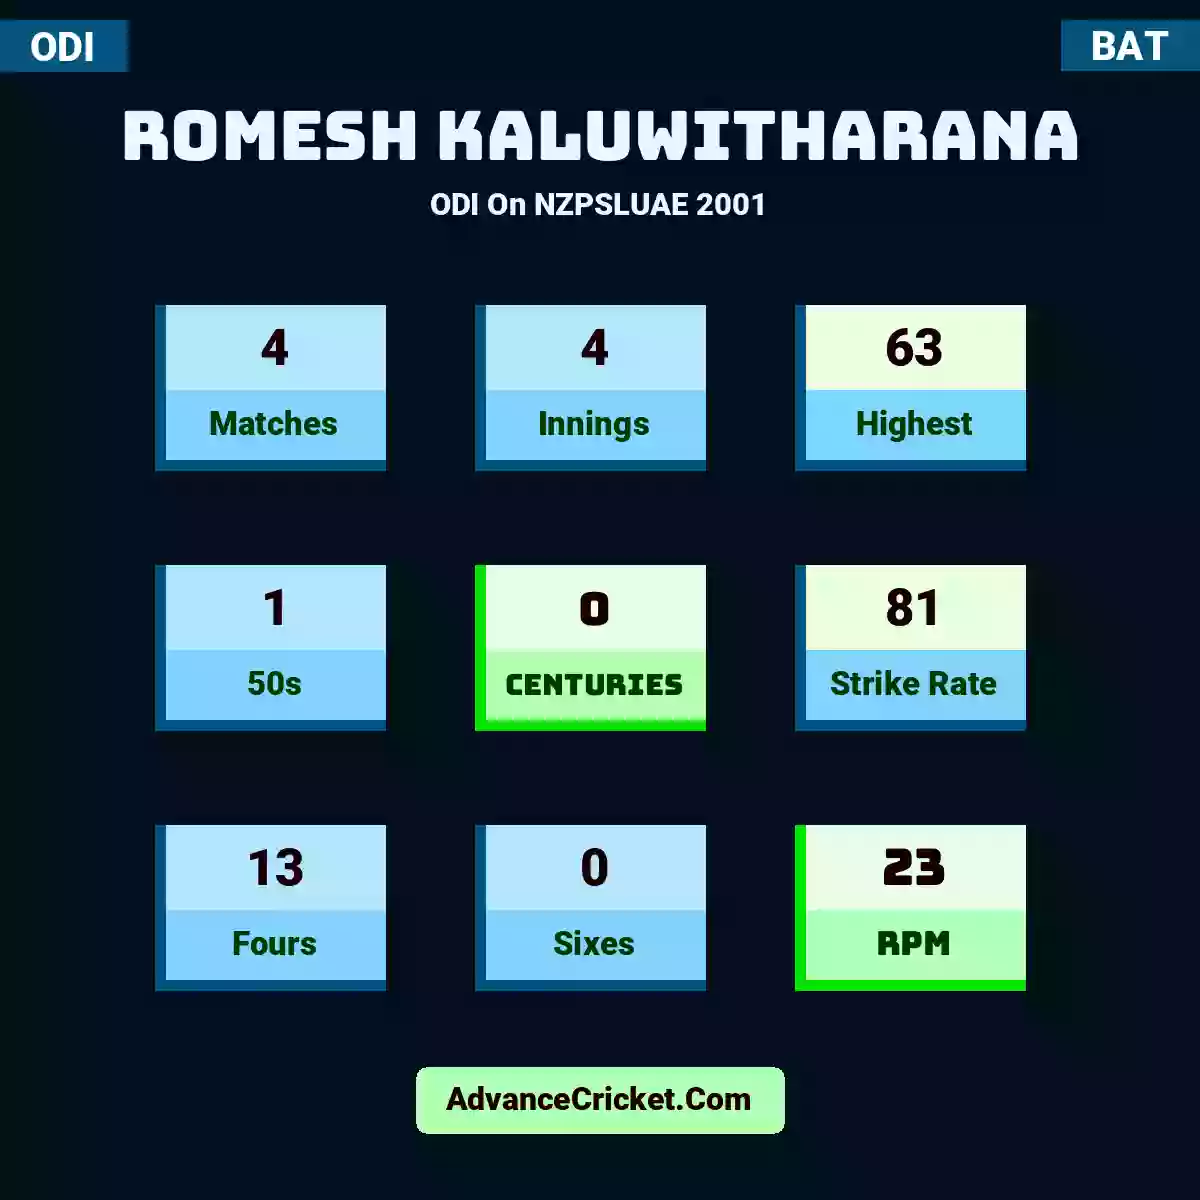 Romesh Kaluwitharana ODI  On NZPSLUAE 2001, Romesh Kaluwitharana played 4 matches, scored 63 runs as highest, 1 half-centuries, and 0 centuries, with a strike rate of 81. R.Kaluwitharana hit 13 fours and 0 sixes, with an RPM of 23.